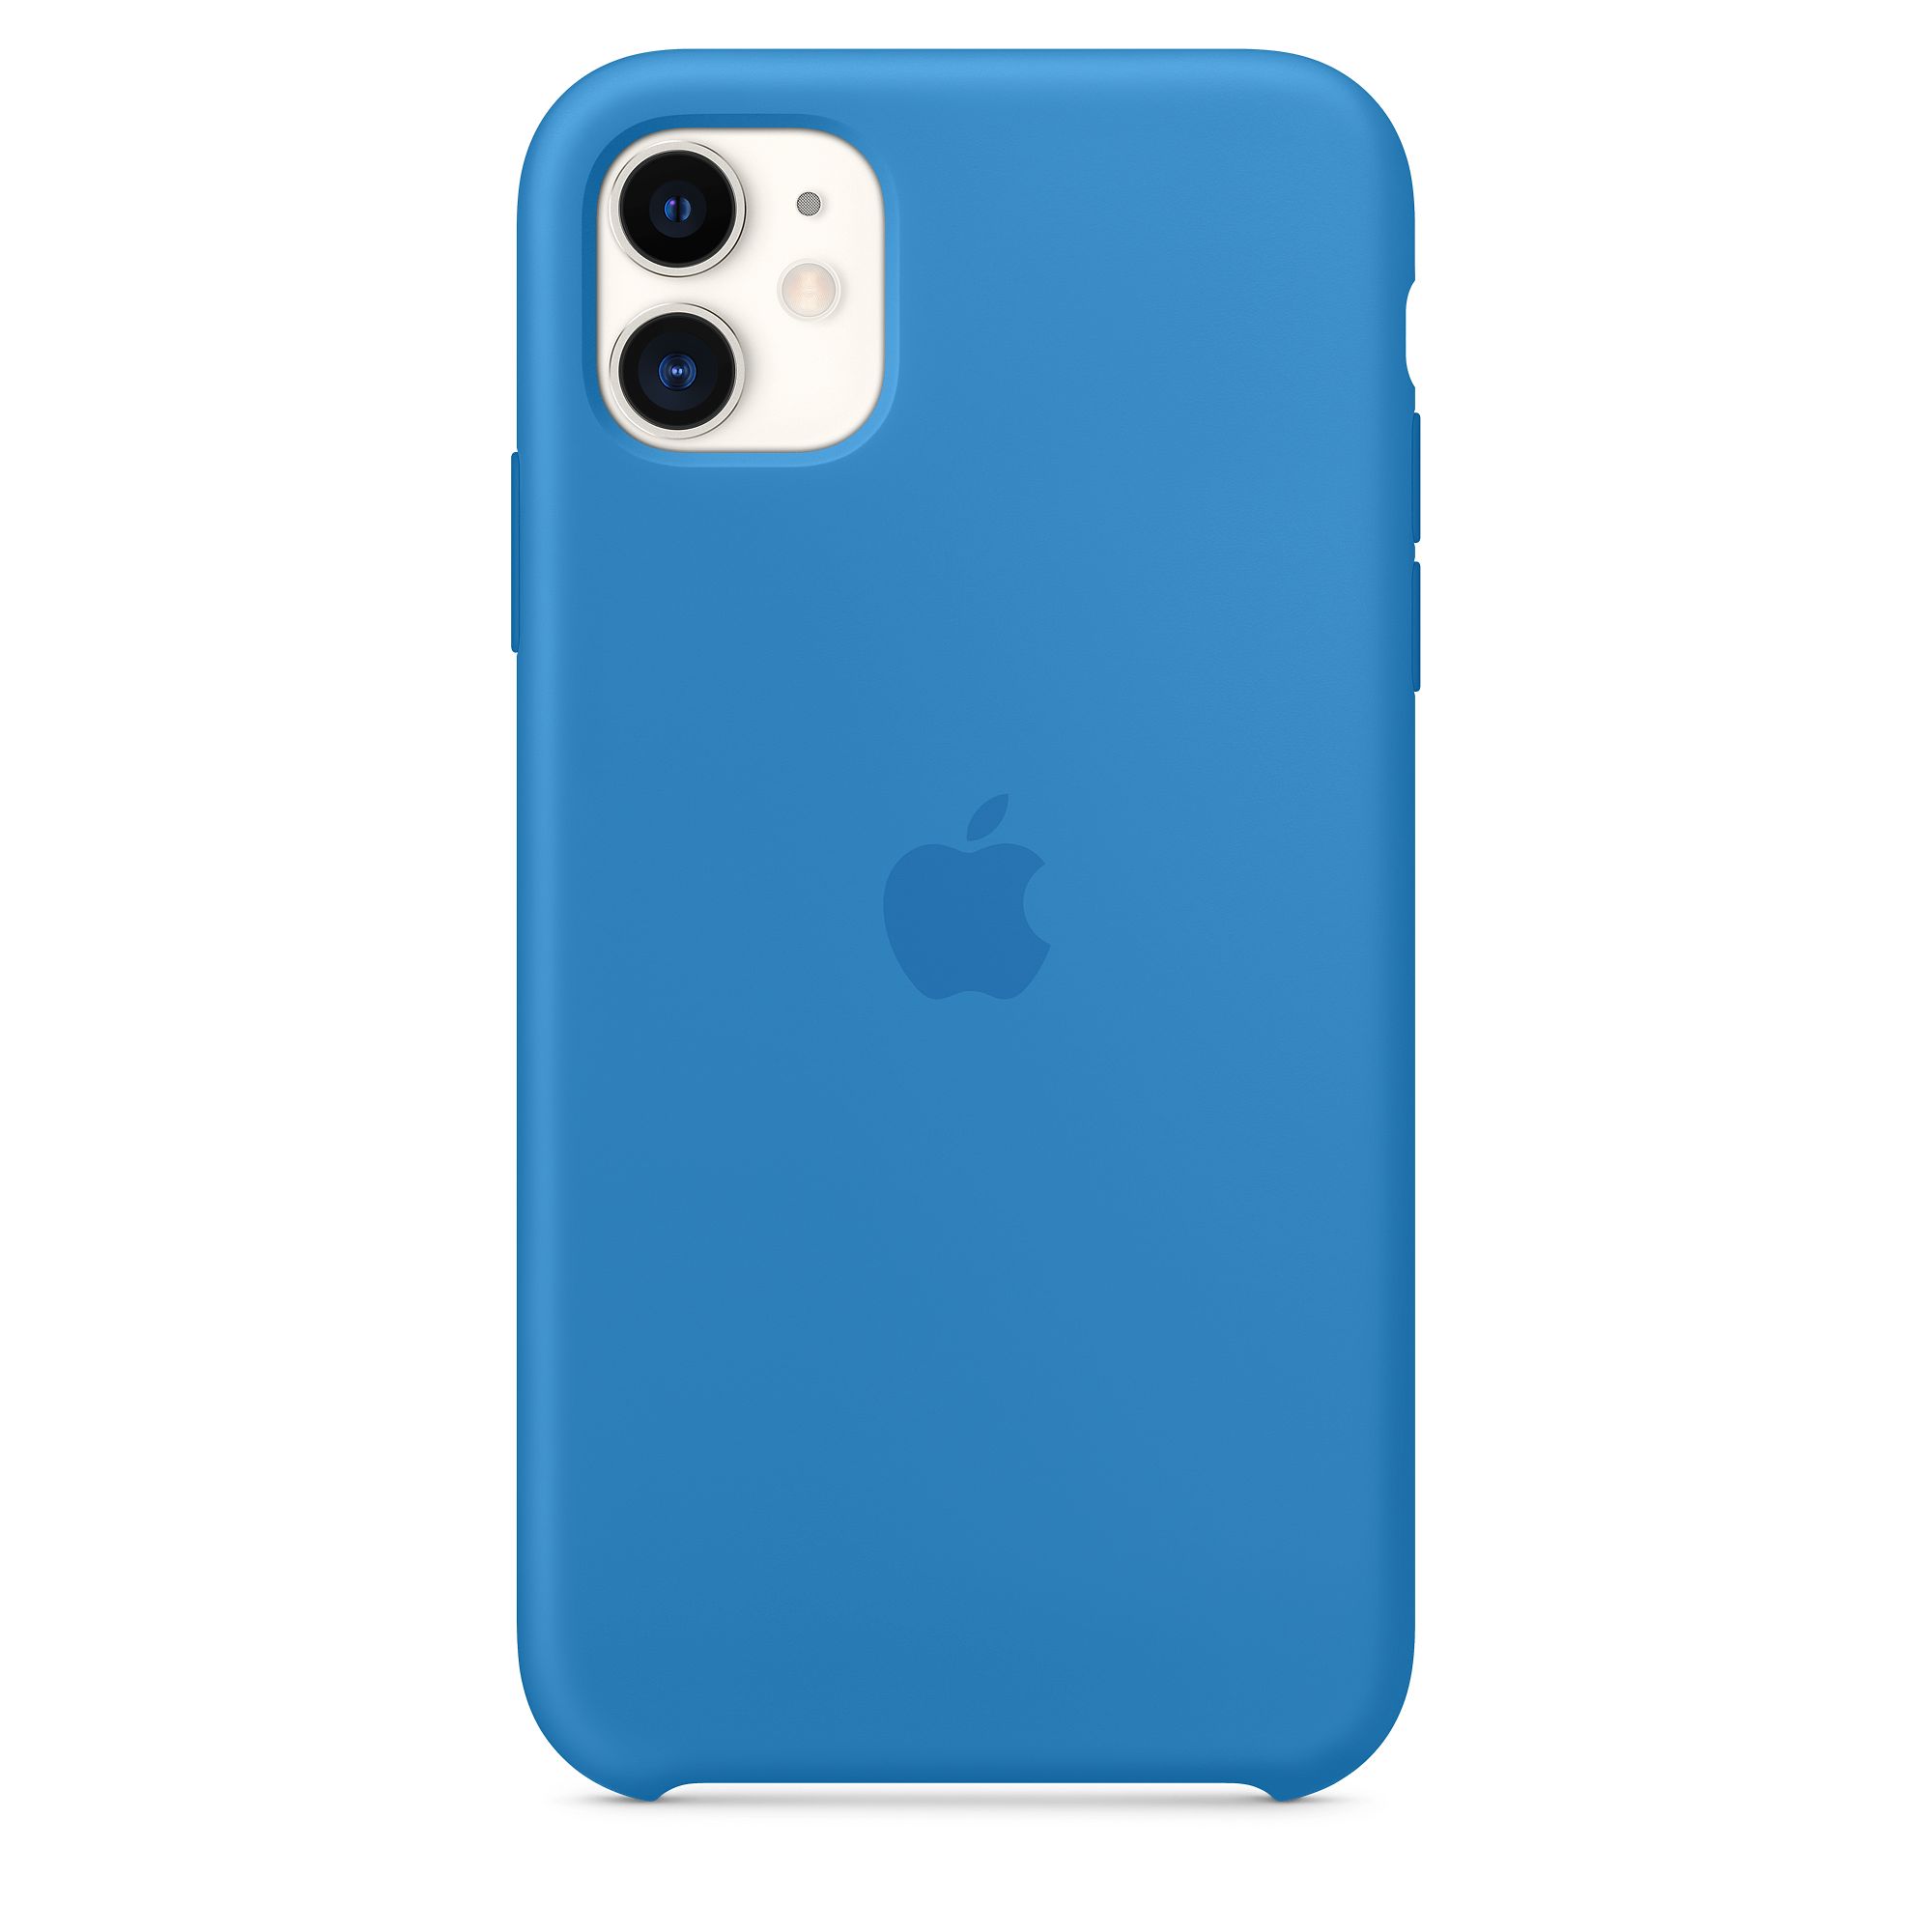 Buy Iphone 11 Pro Max Silicone Case Price Online In Nigeria Lagos Abuja